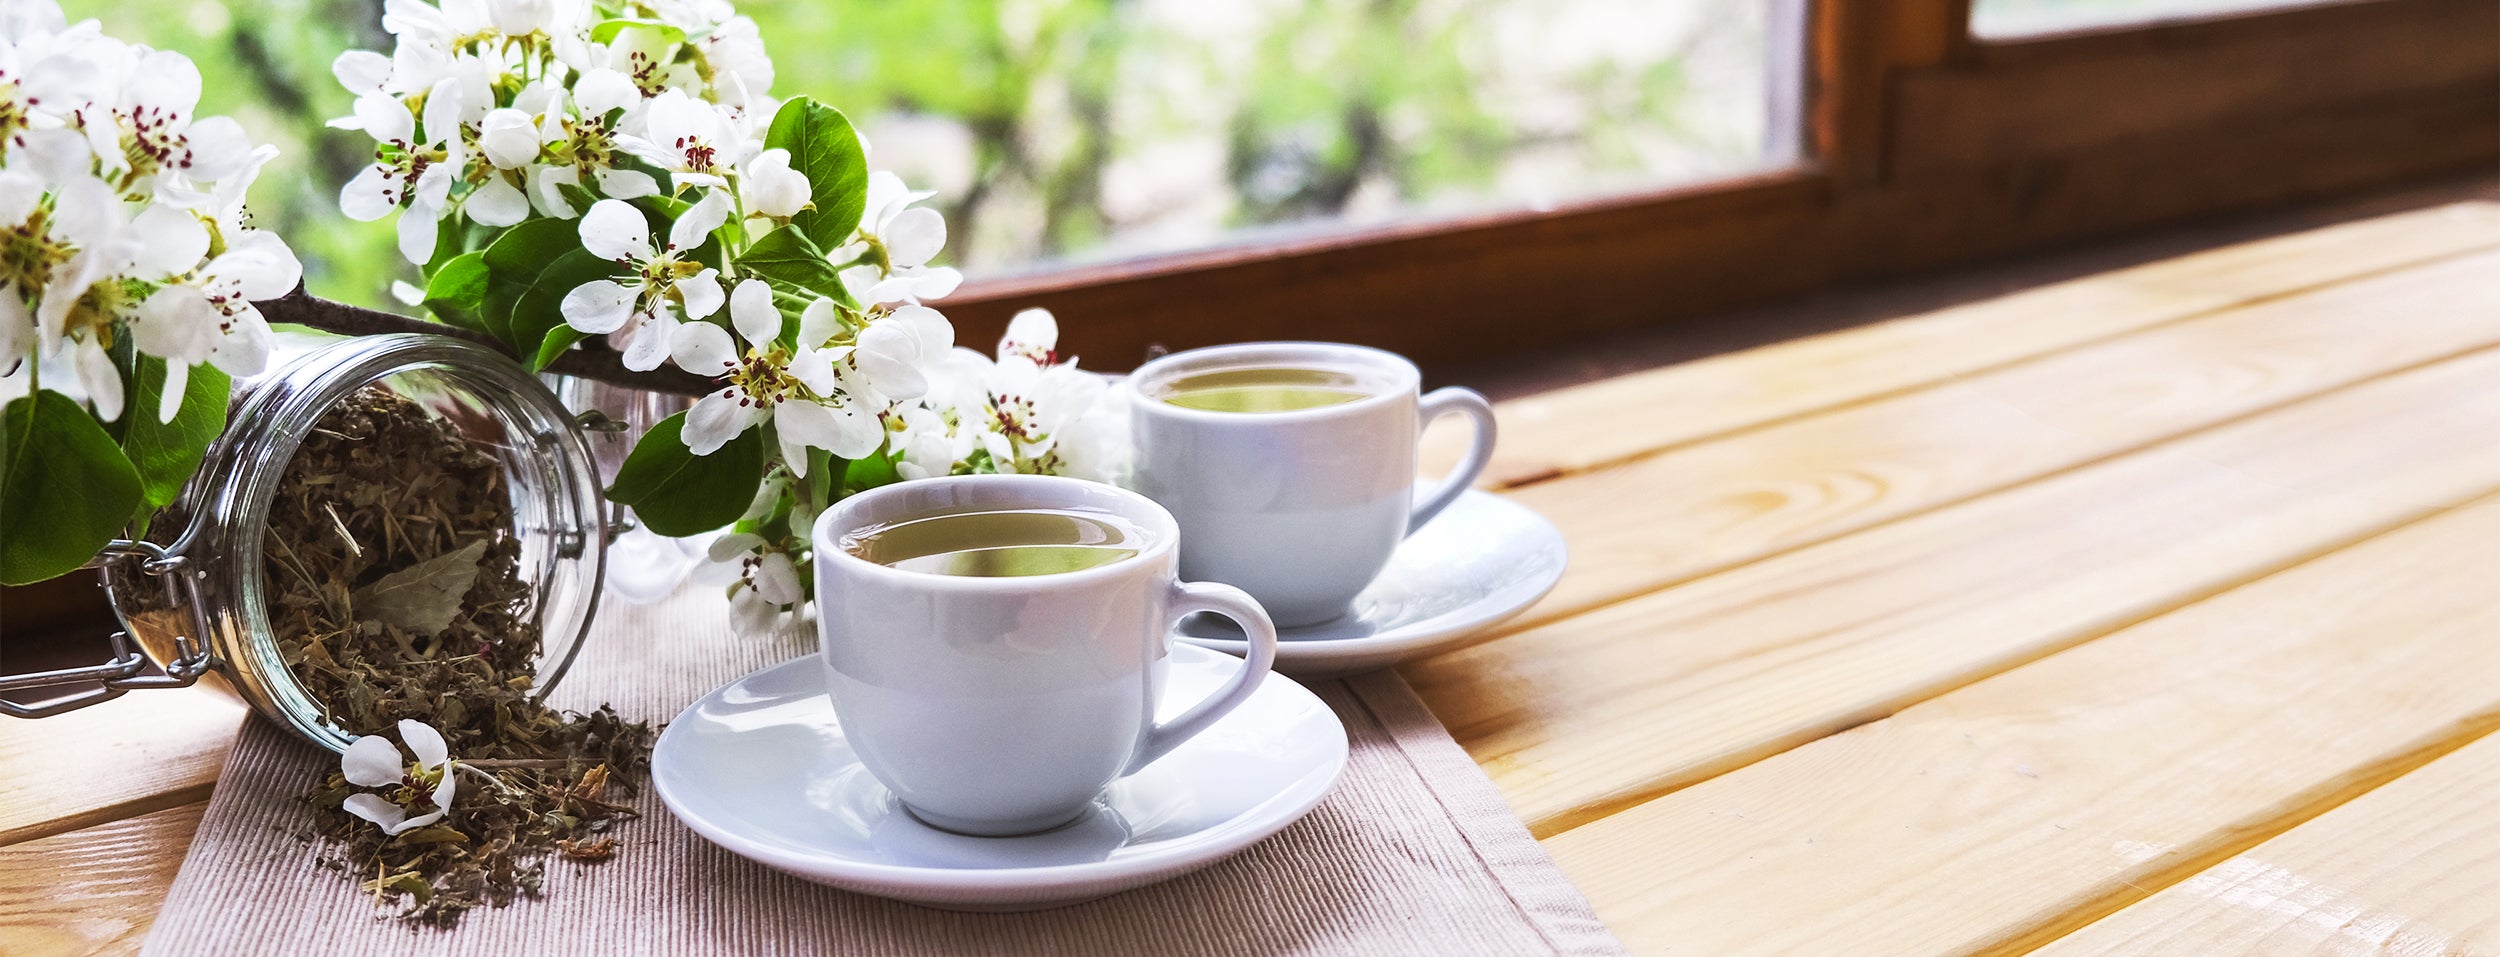 Uptown Tea Shop - Premium Teas and Accessories - White Tea Collection